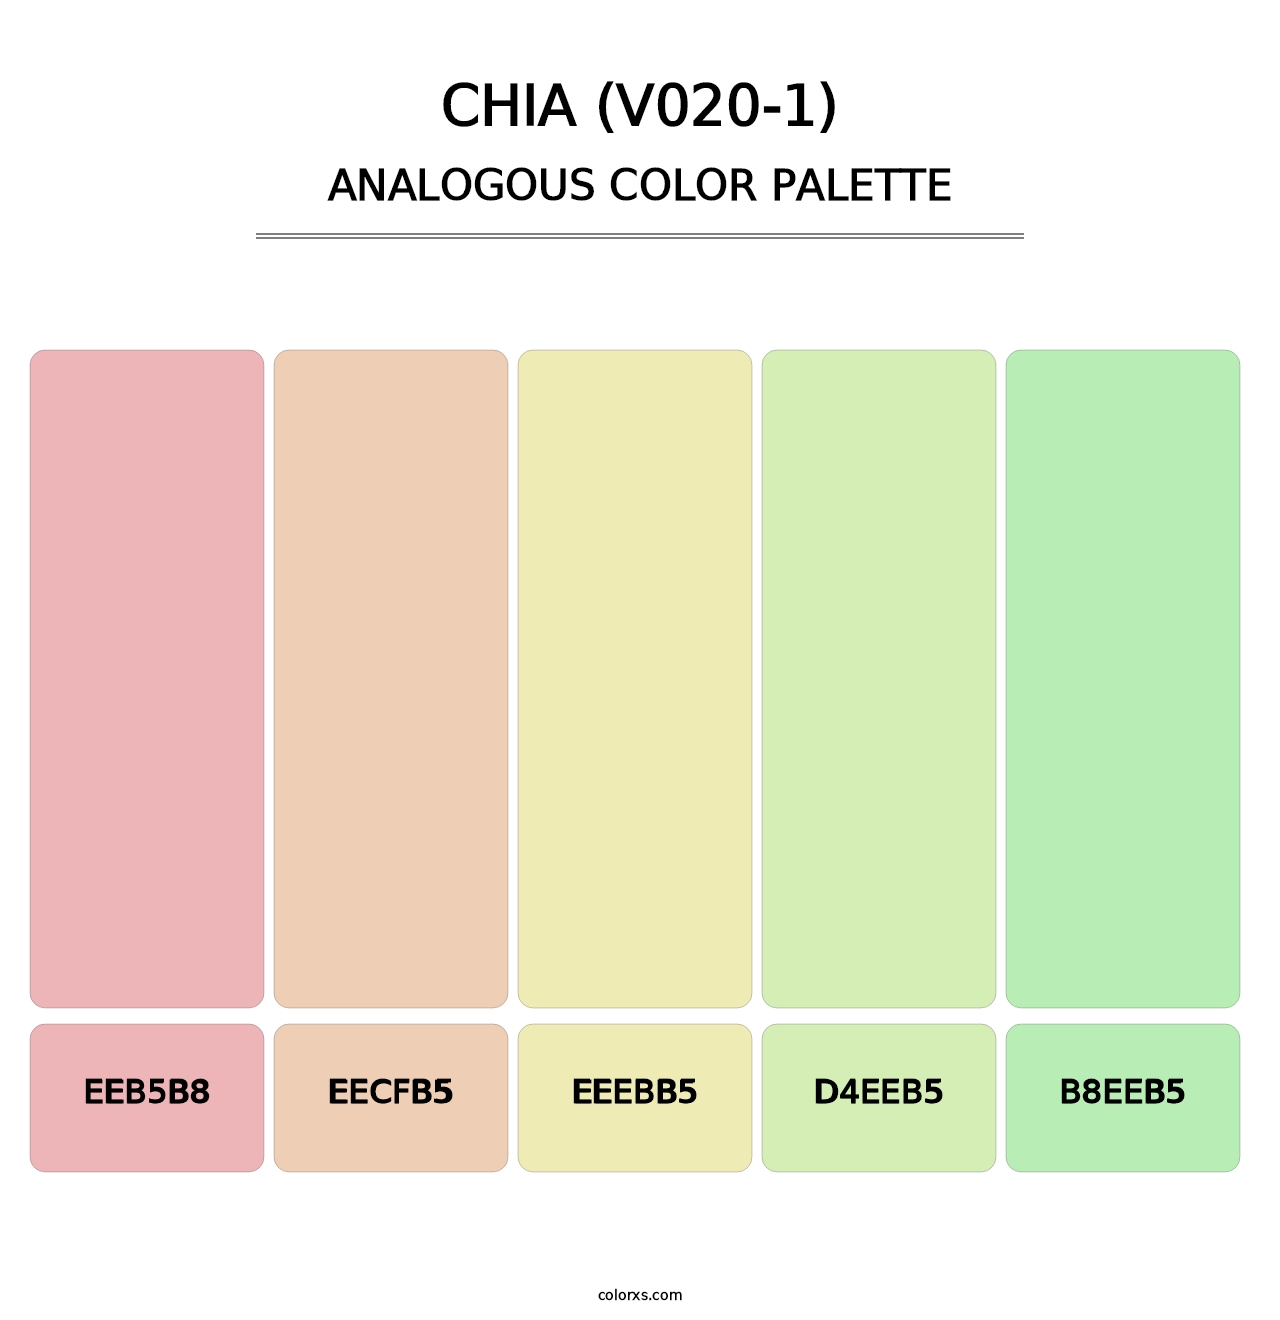 Chia (V020-1) - Analogous Color Palette